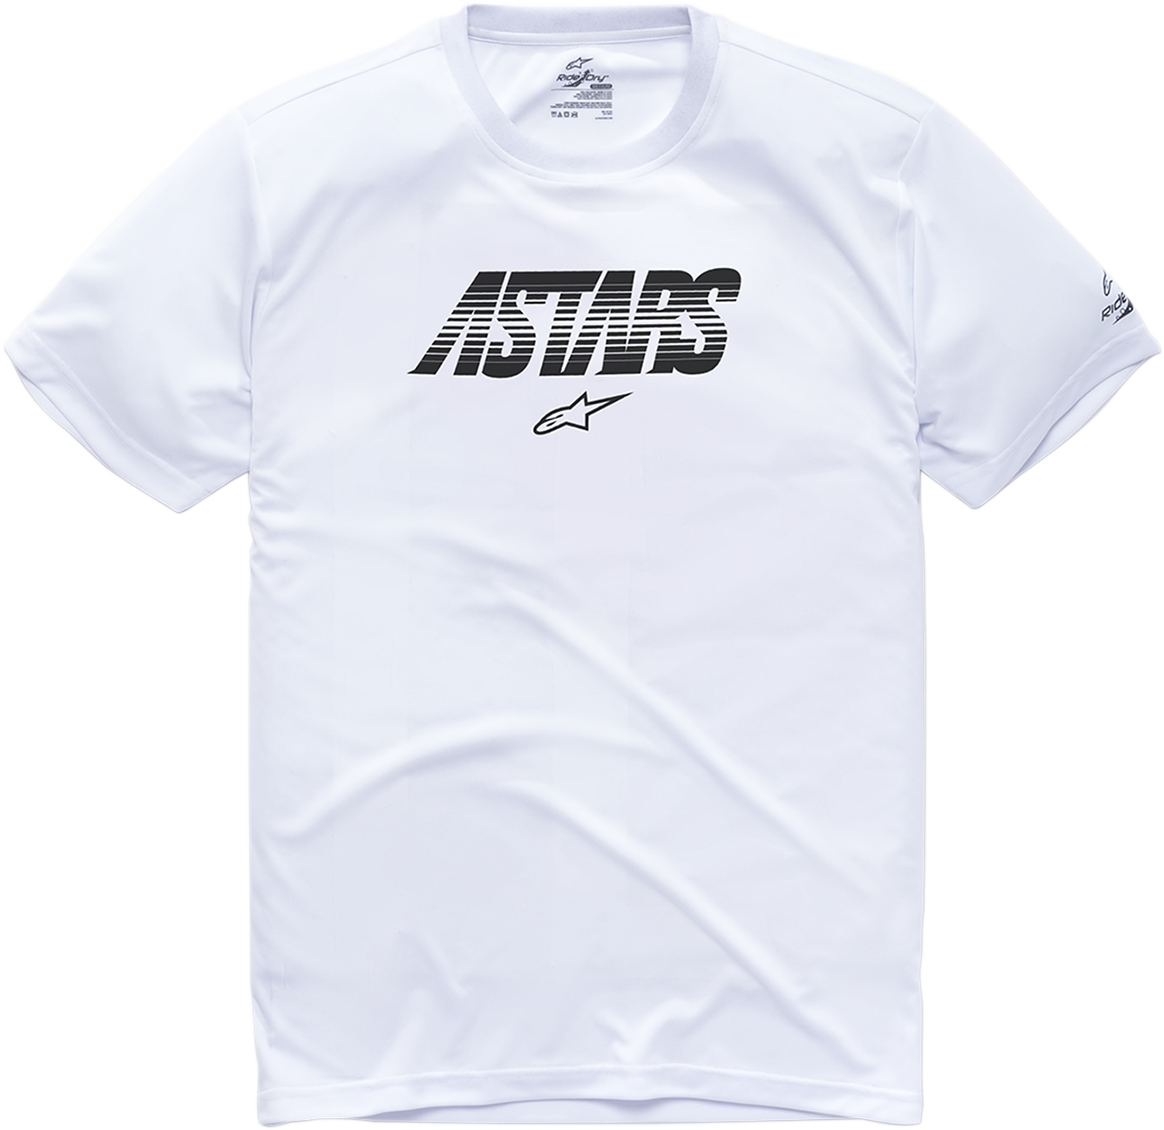 Tech Angle Premium T-Shirt - White - Medium